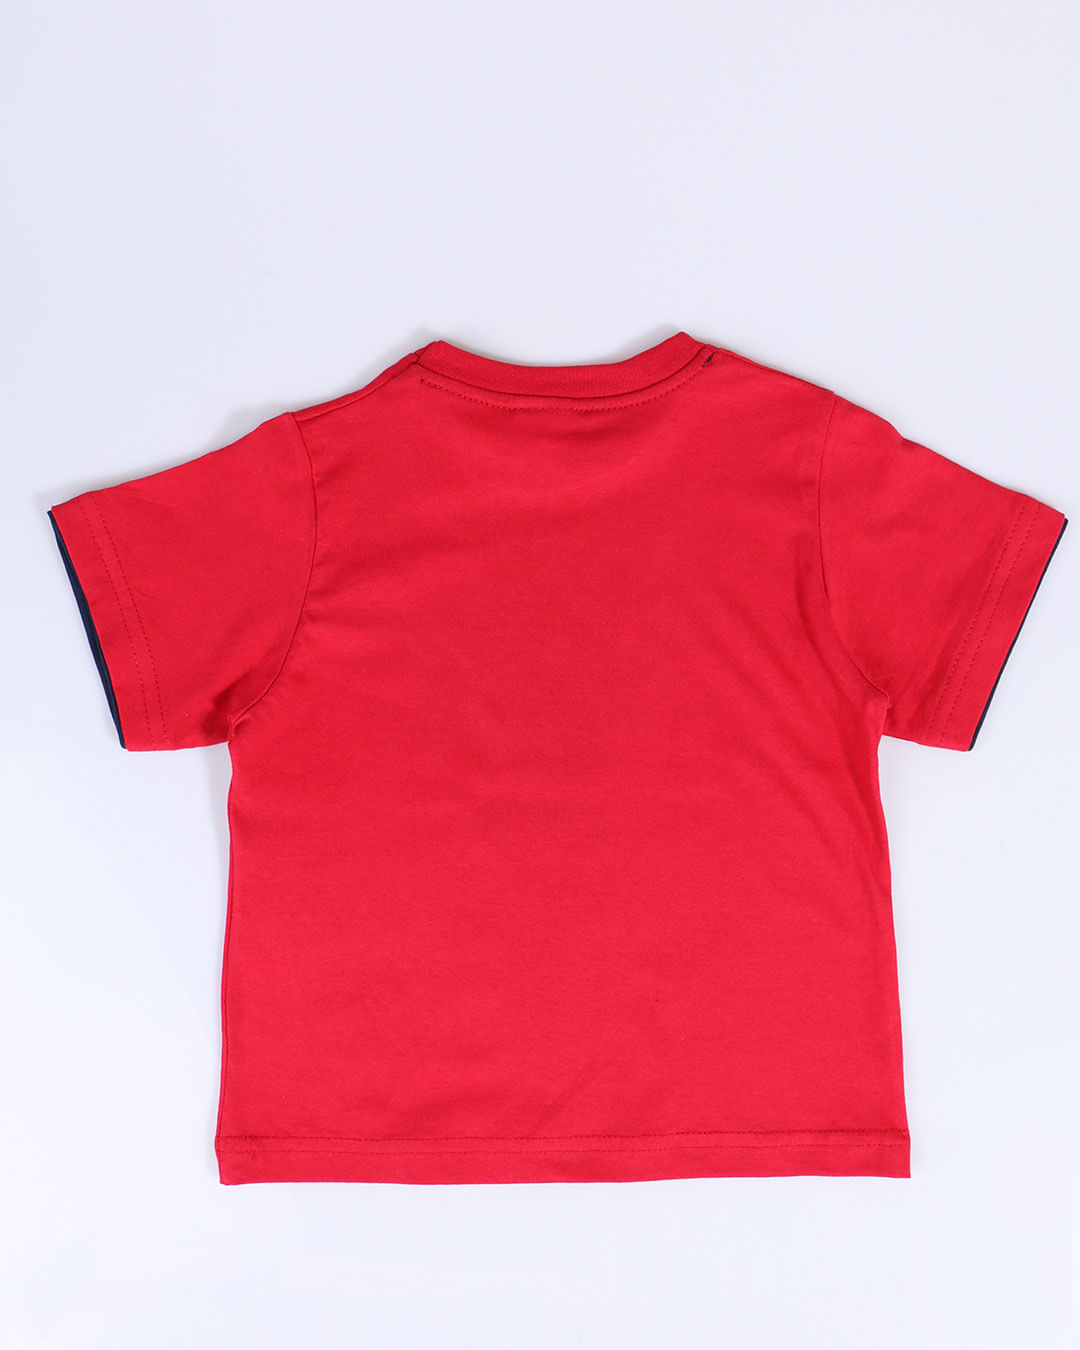 Camiseta-Bebe-Estampa-Dino-Space-Vermelha